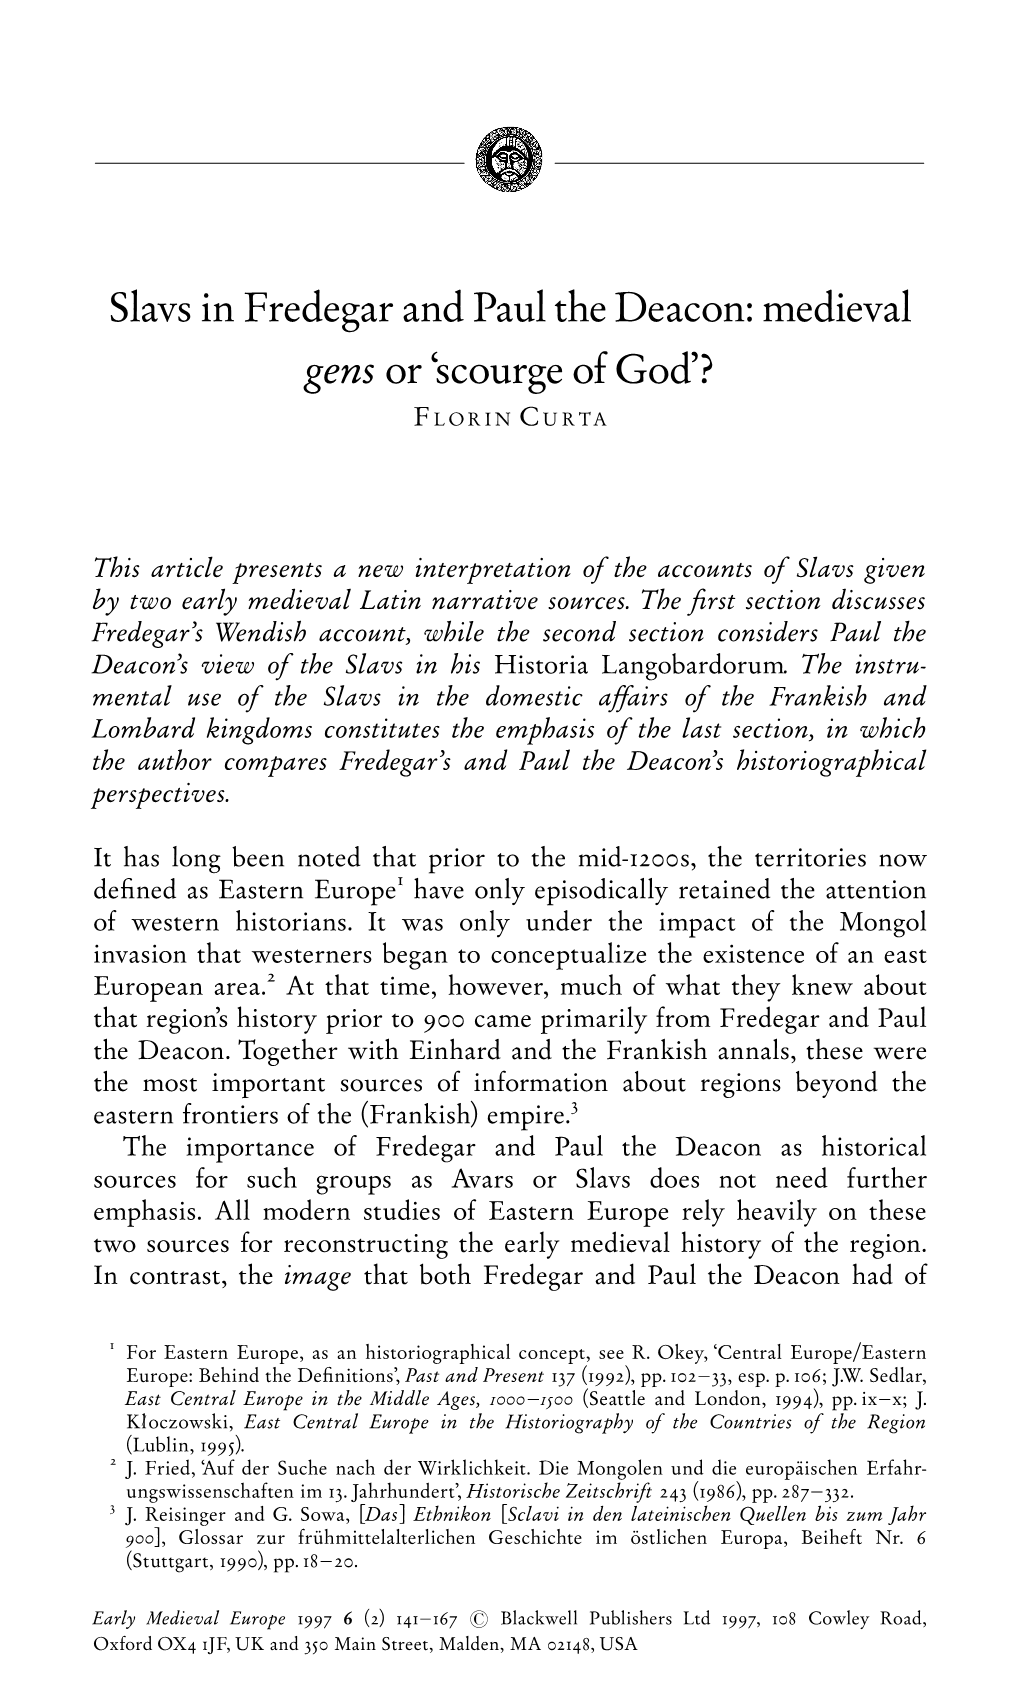 Slavs in Fredegar and Paul the Deacon: Medieval Gensor